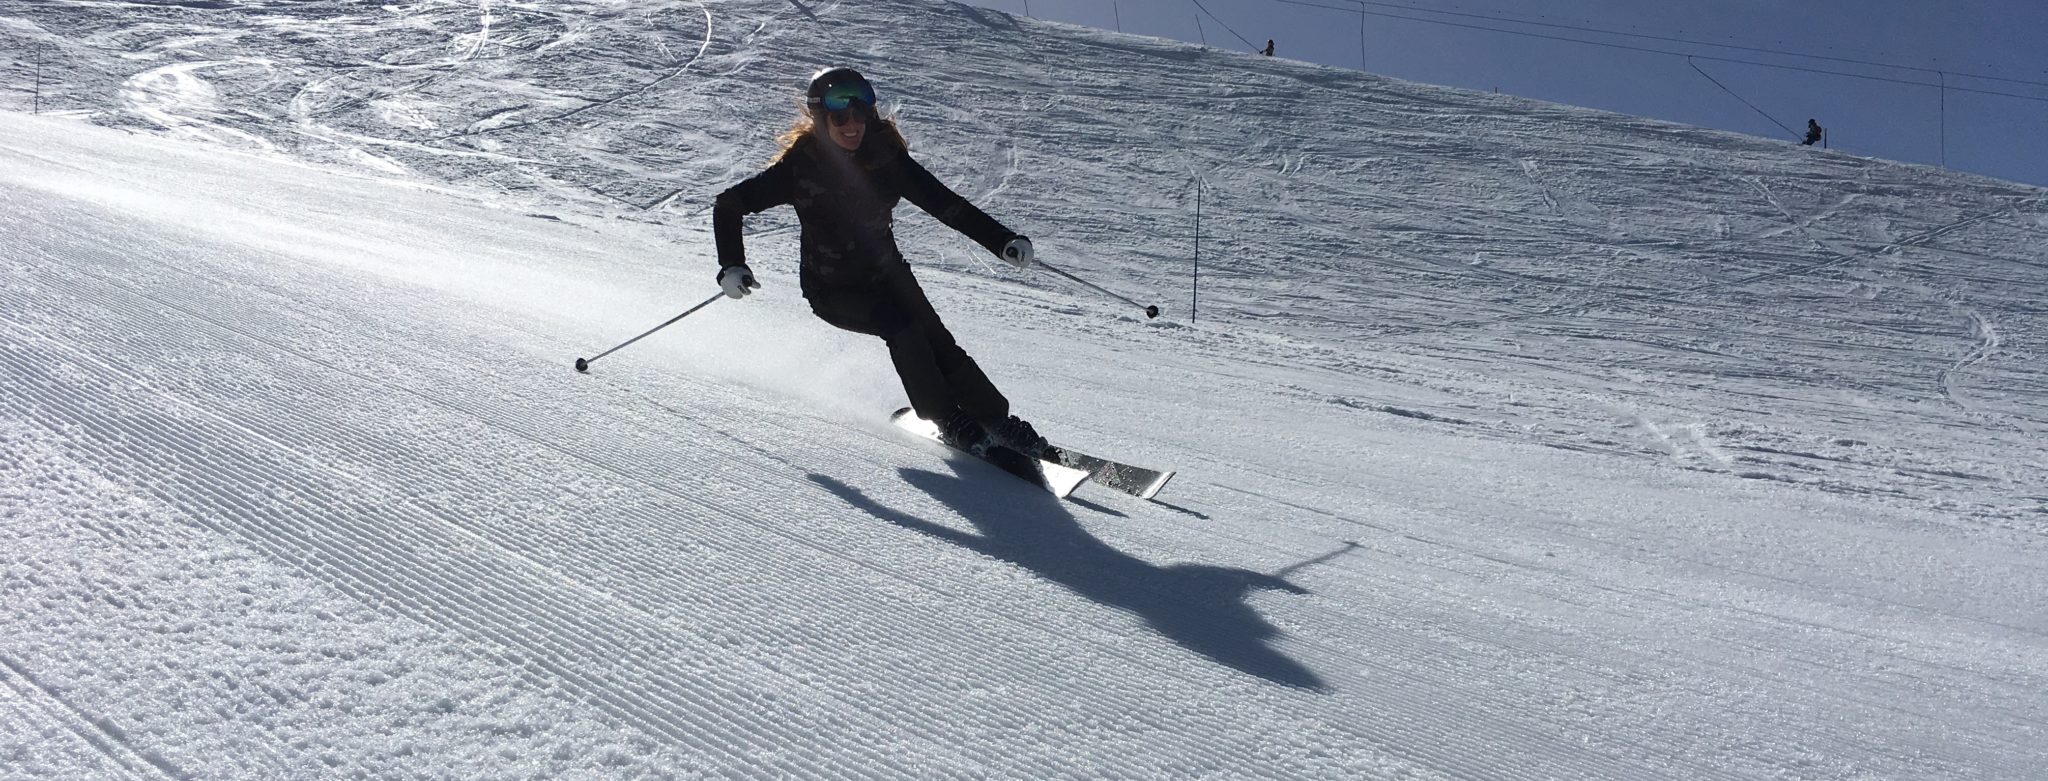 Tests : skis femmes 18/19 - piste performance - snowflike